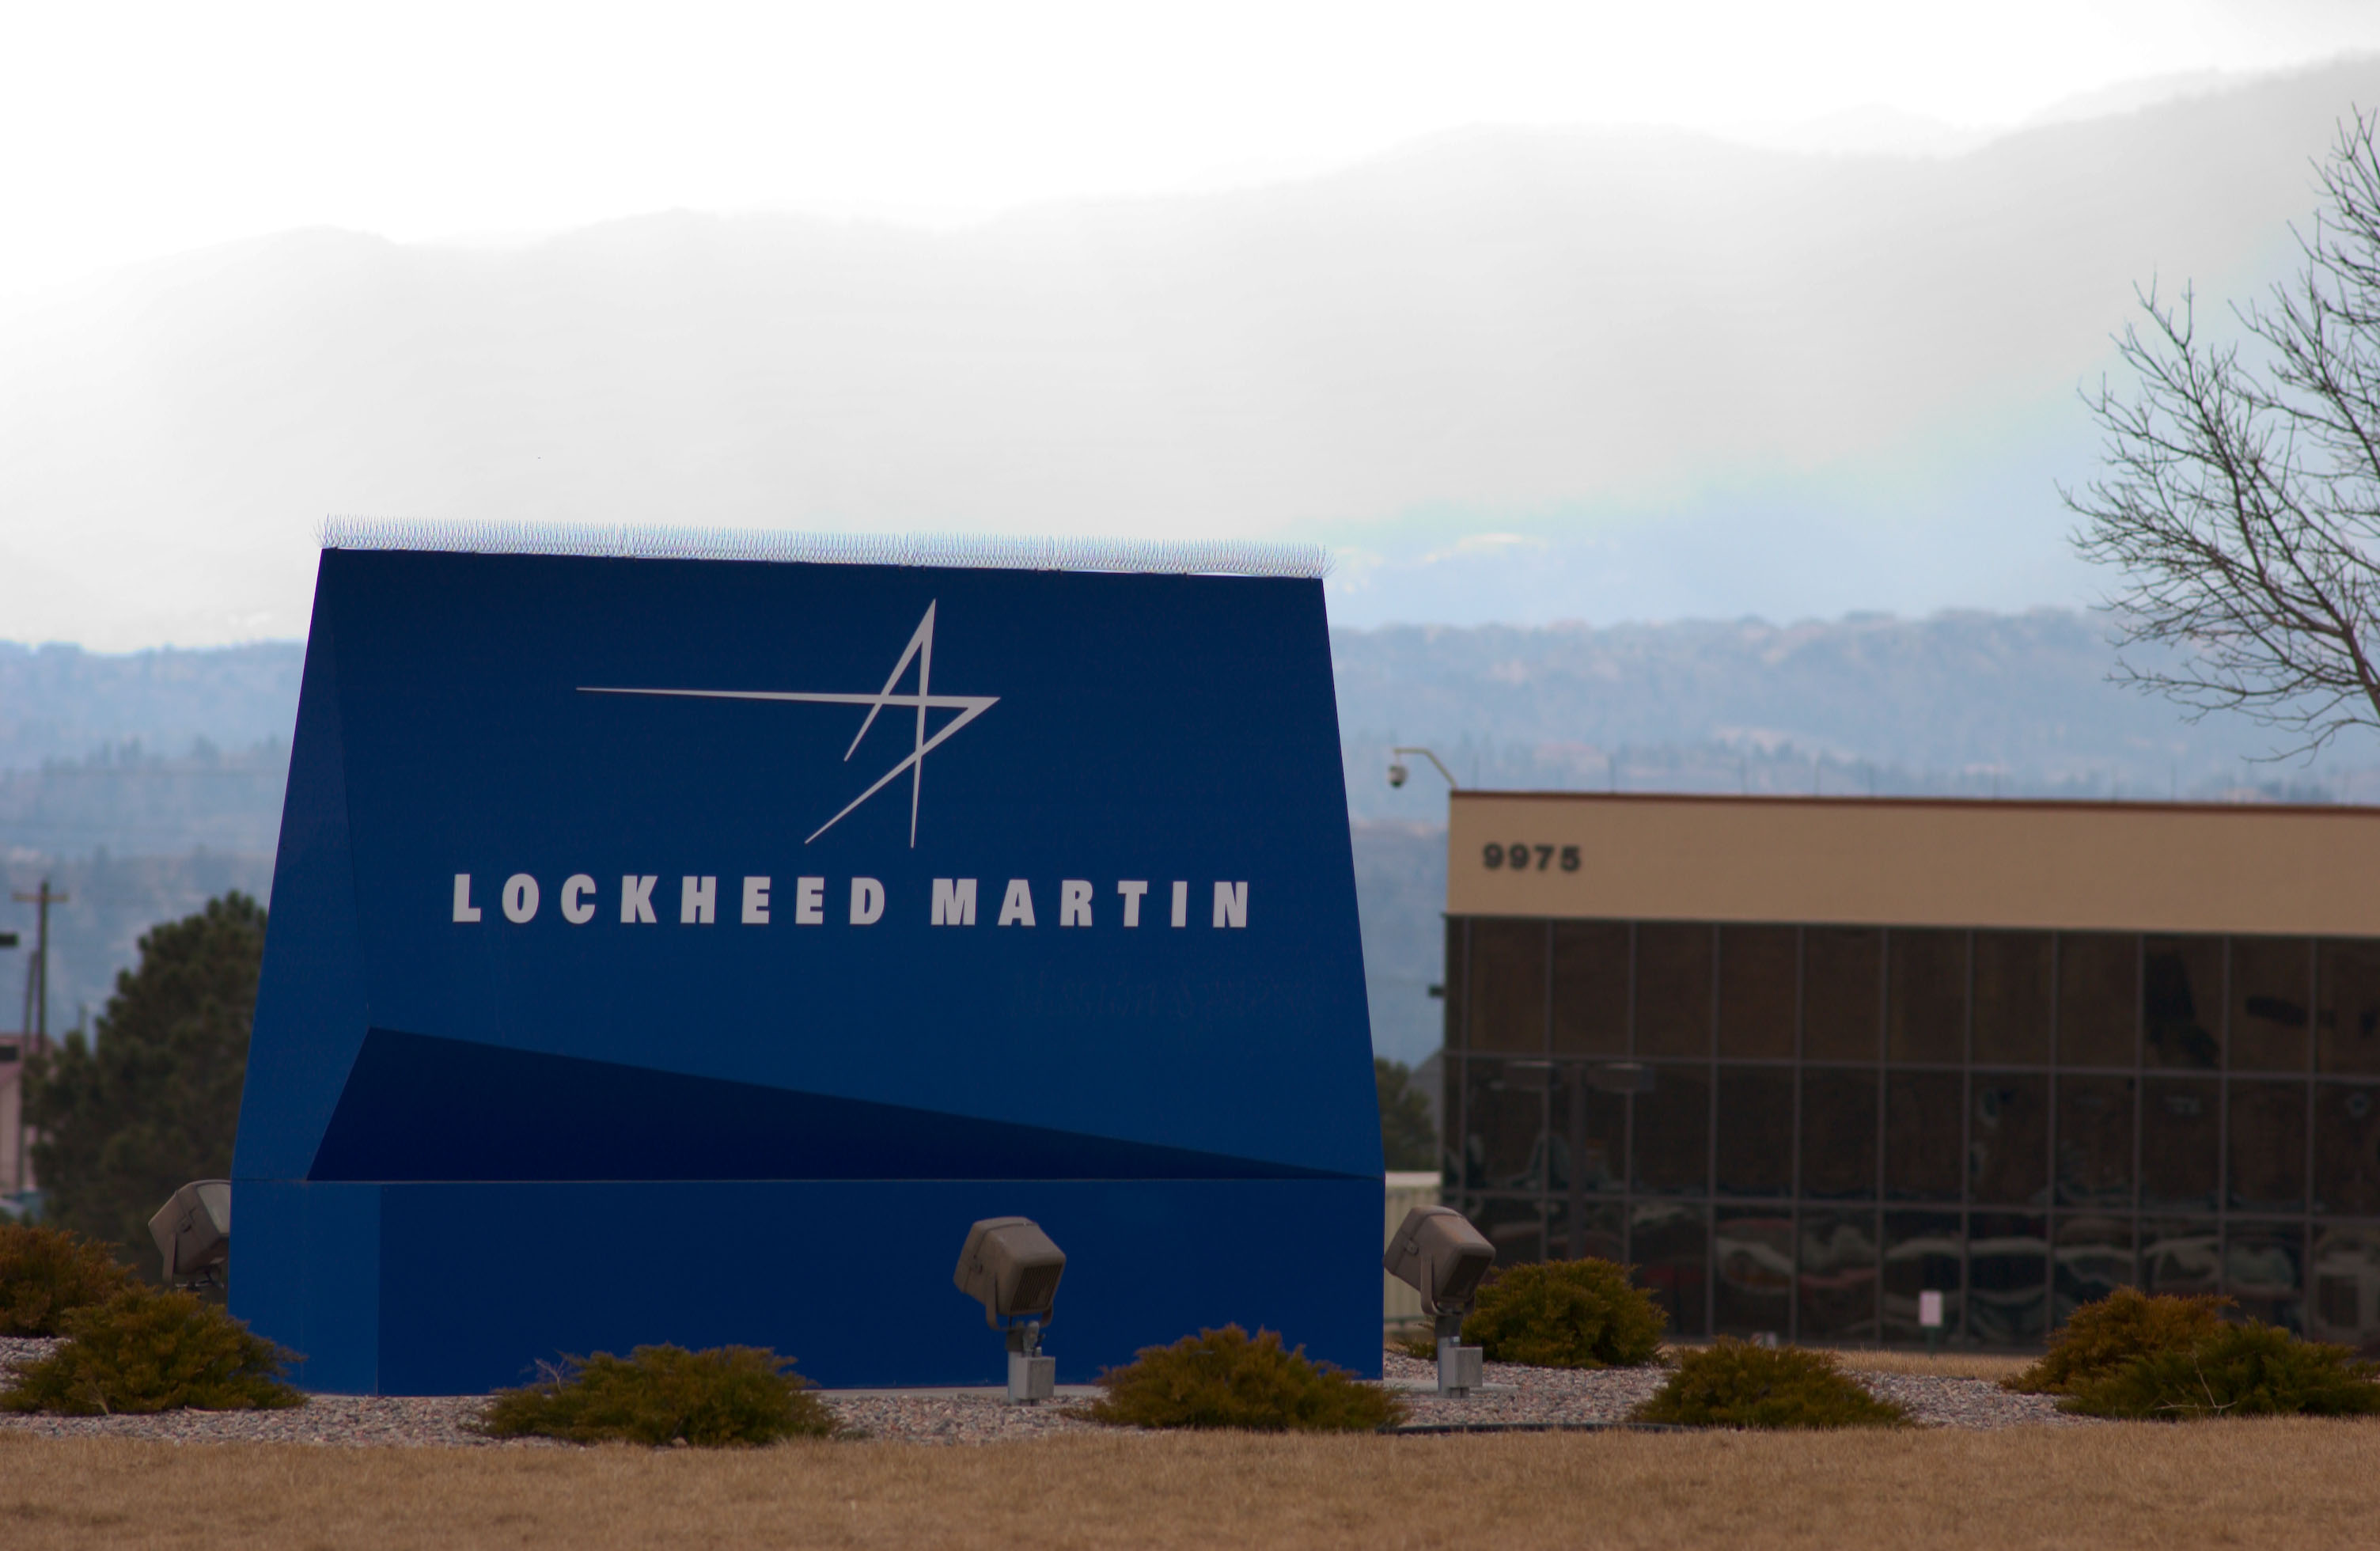 Lockheed Martin Waterton Campus Map Lockheed Martin Adding Hundreds Of Jobs To Colo. Hq | 9News.com